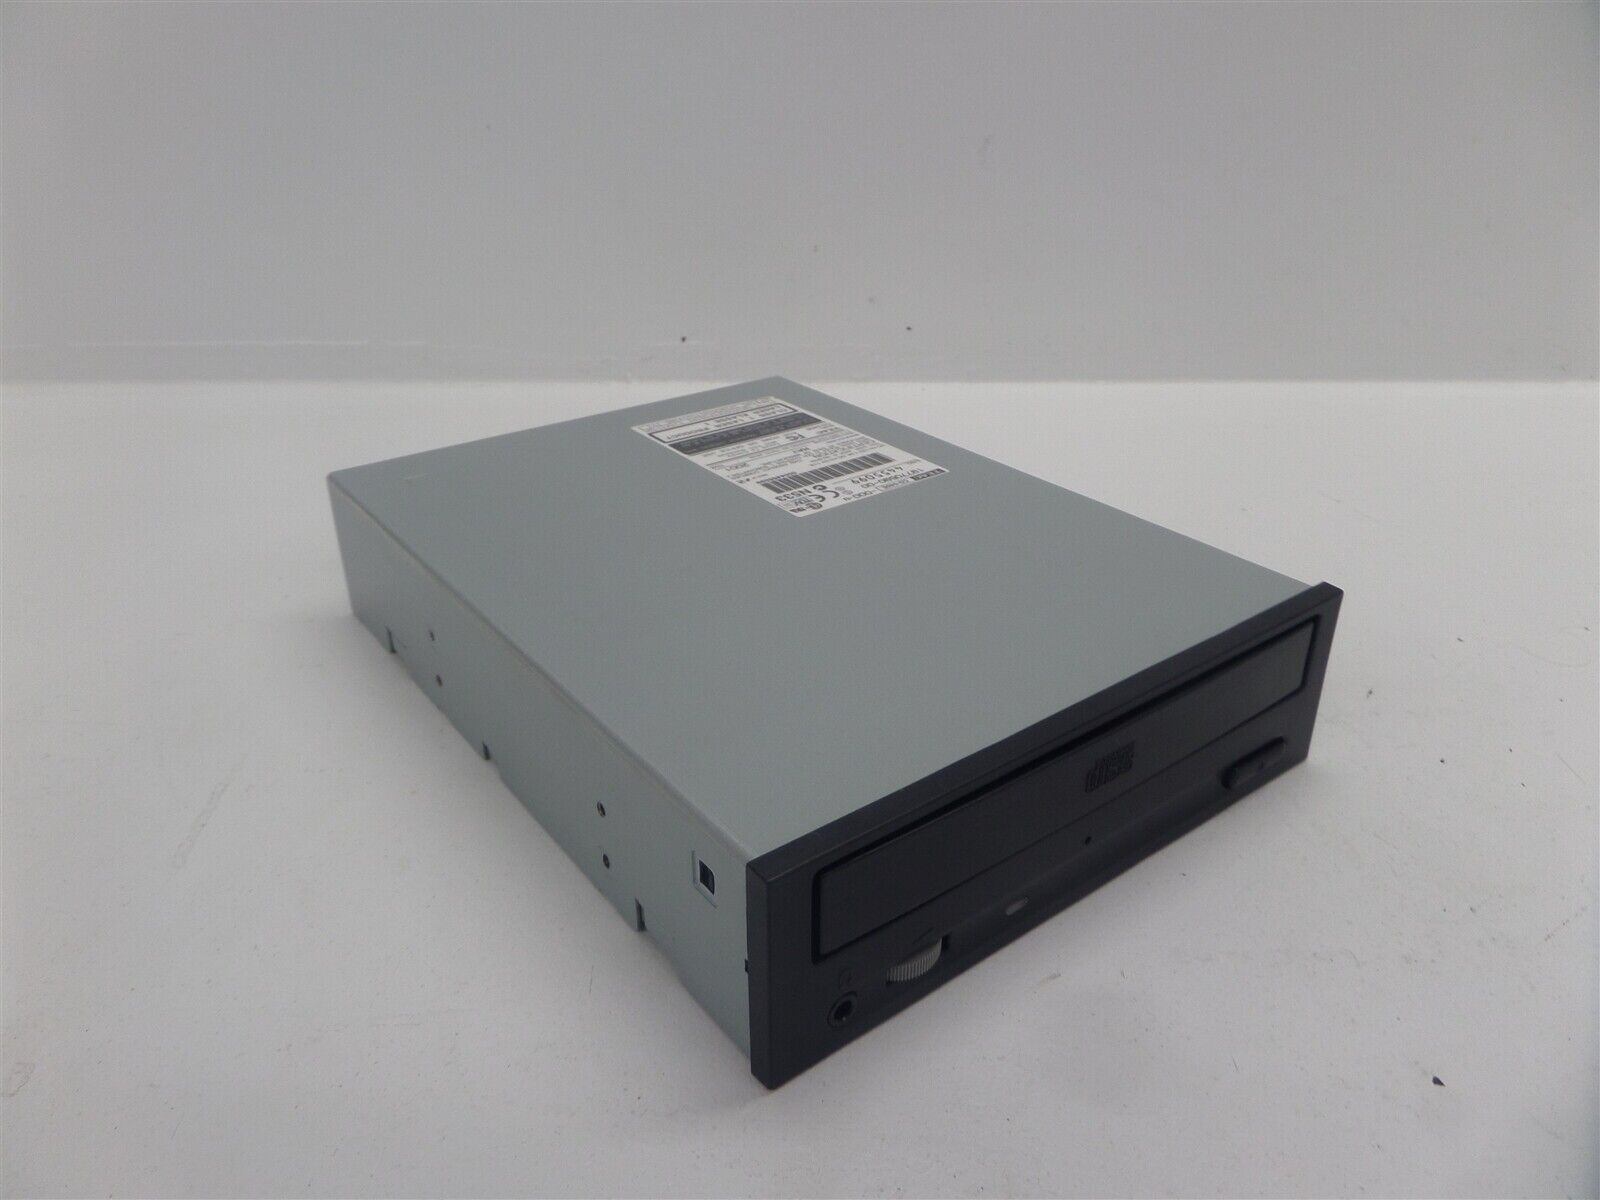 Teac CD-540E 19770590-00 IDE CD-ROM Drive - Black Bezel